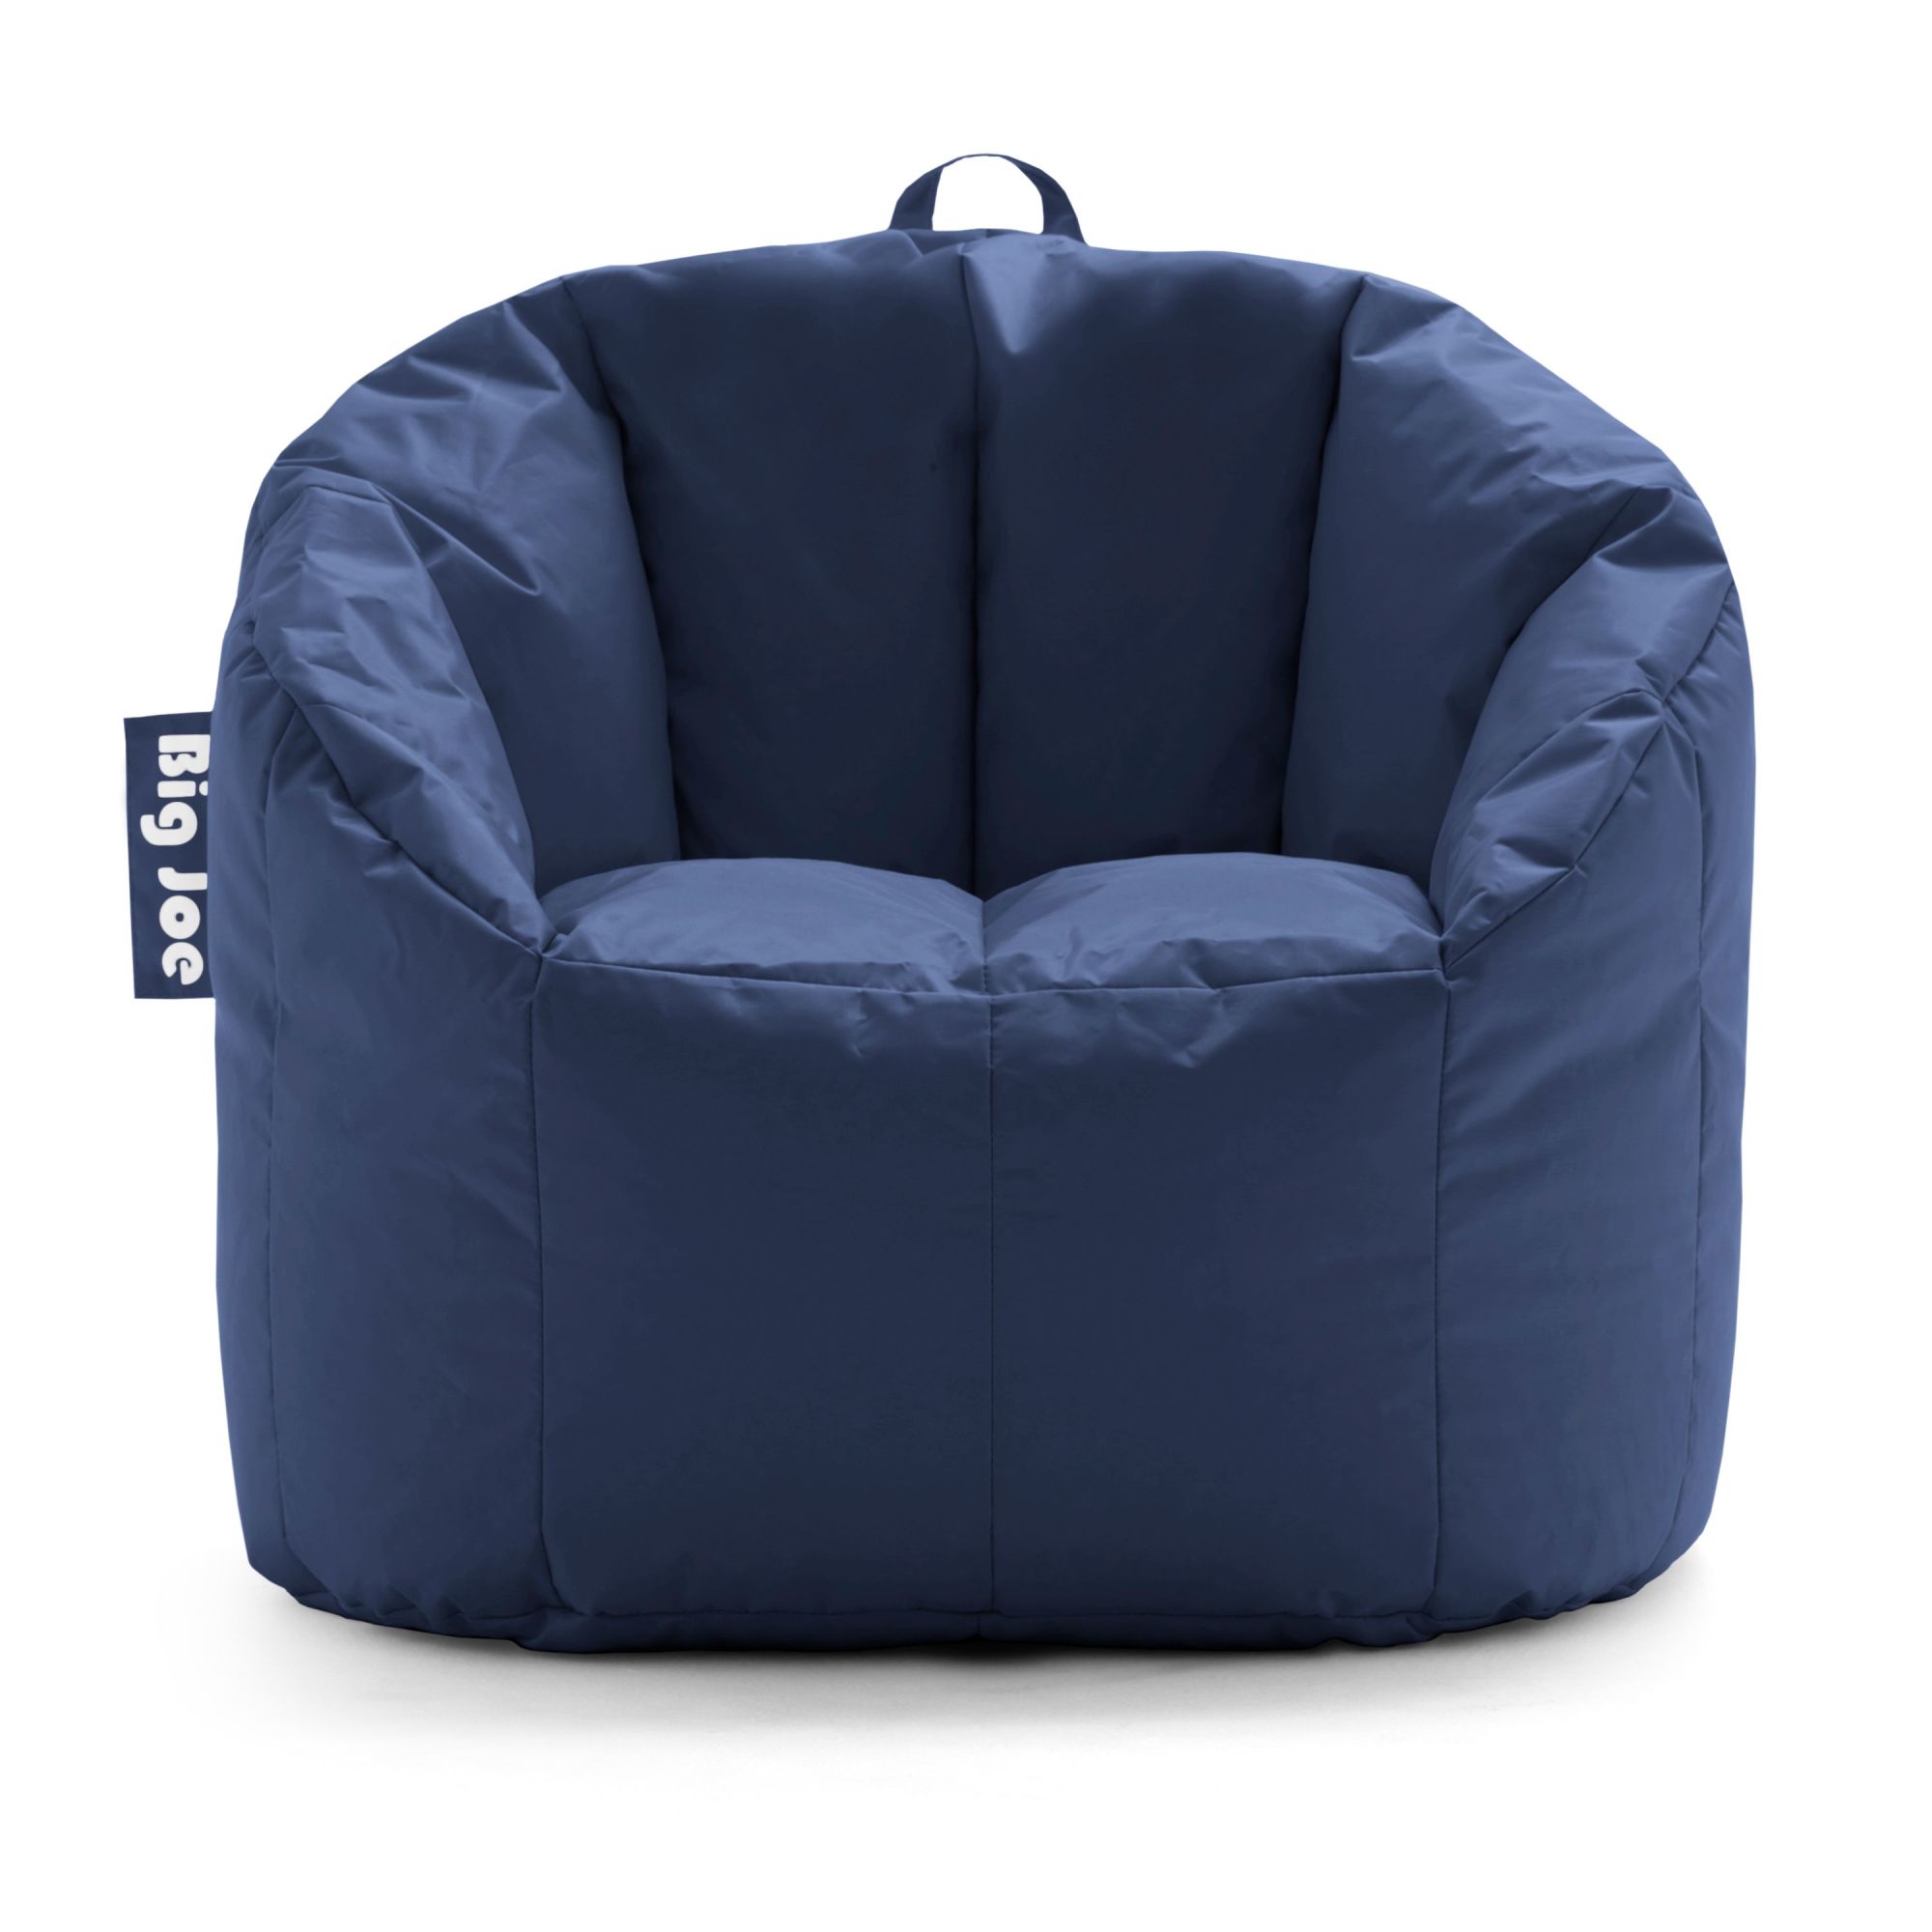 Big Joe Milano Bean Bag Chair, Navy Smartmax, Durable Polyester Nylon Blend, 2.5 feet - image 1 of 8